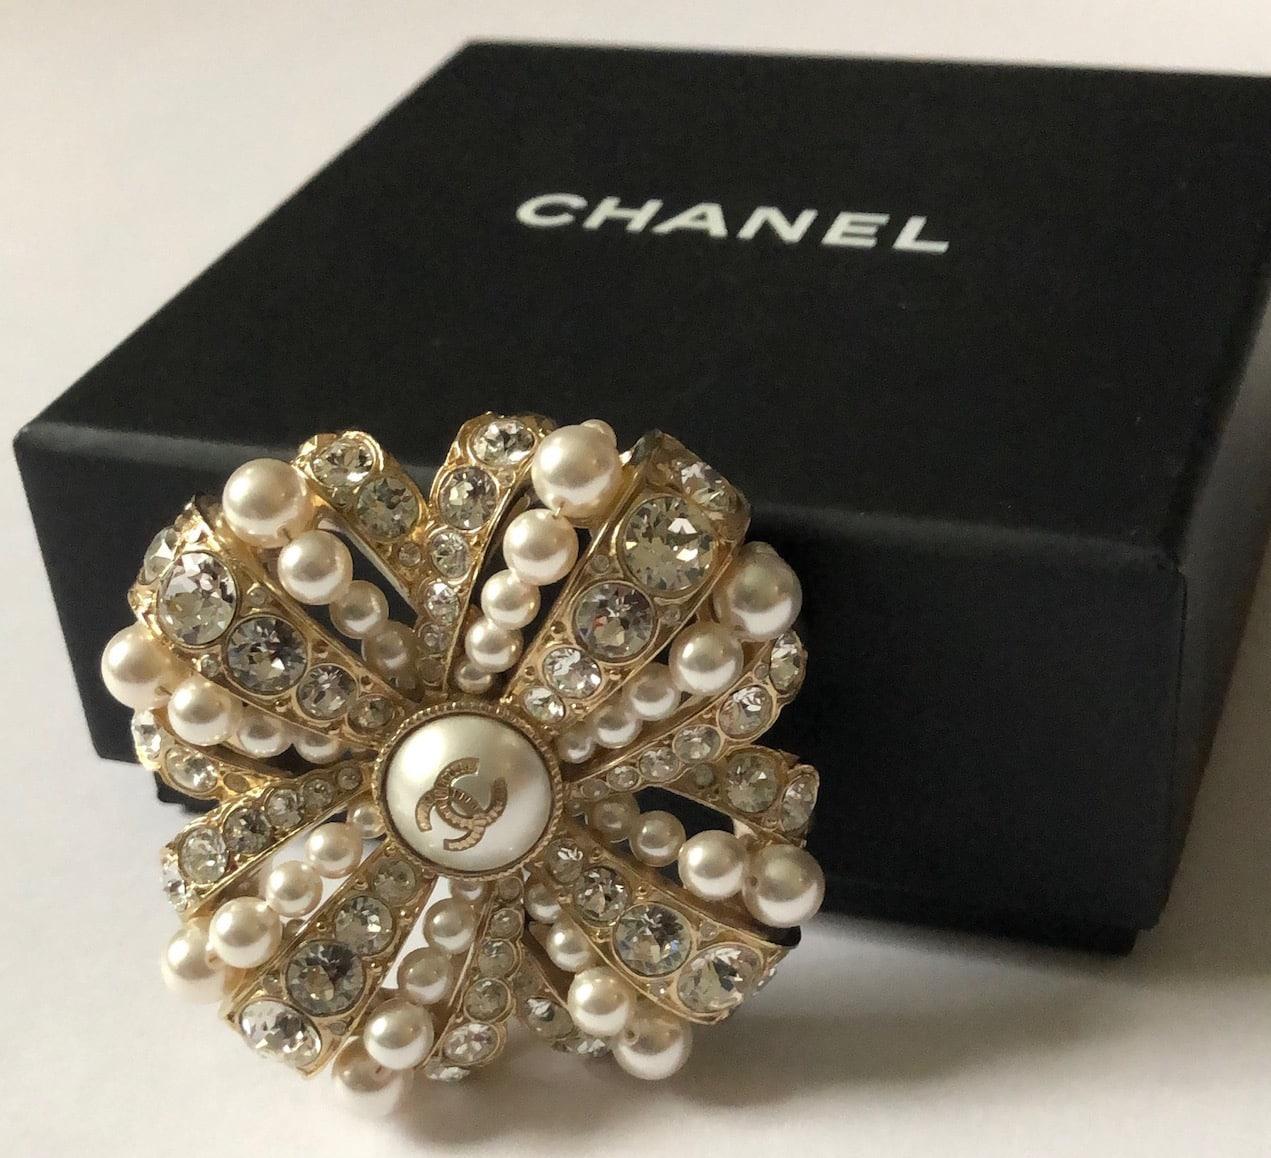 Chanel Brooch 2020 - 9 For Sale on 1stDibs